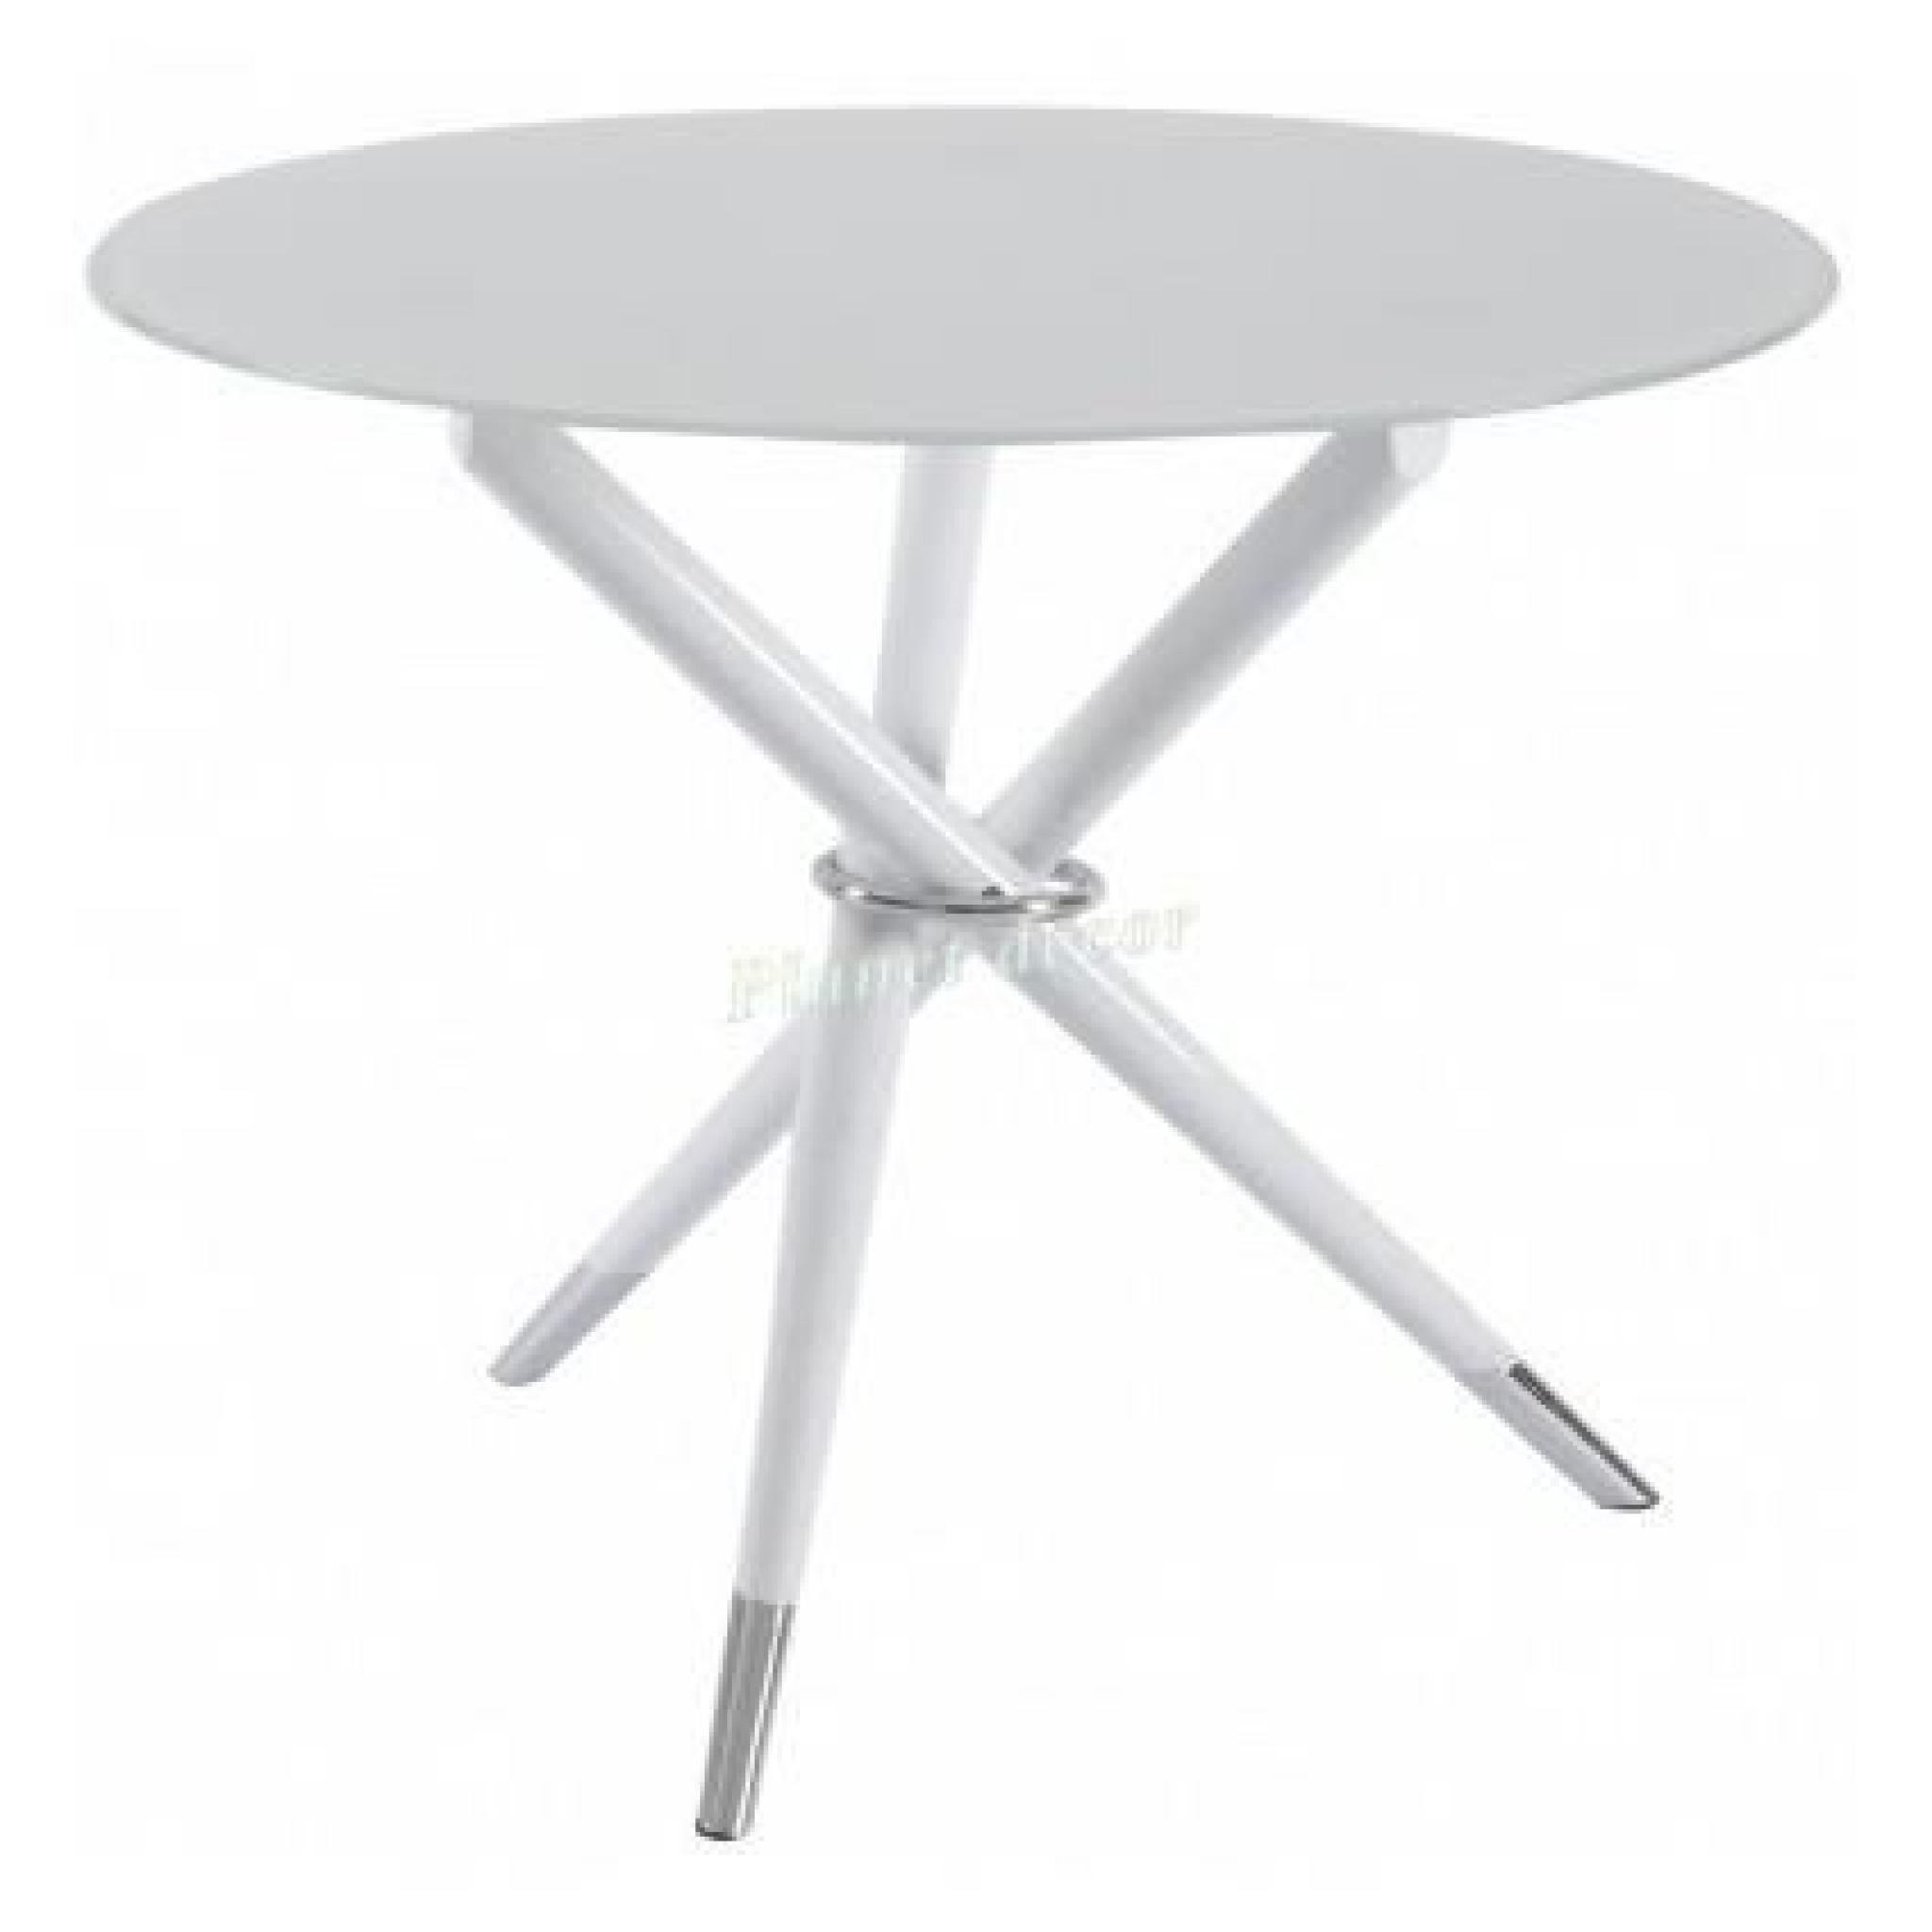 TABLE RONDE ULTRA DESIGN COLORIS BLANC 